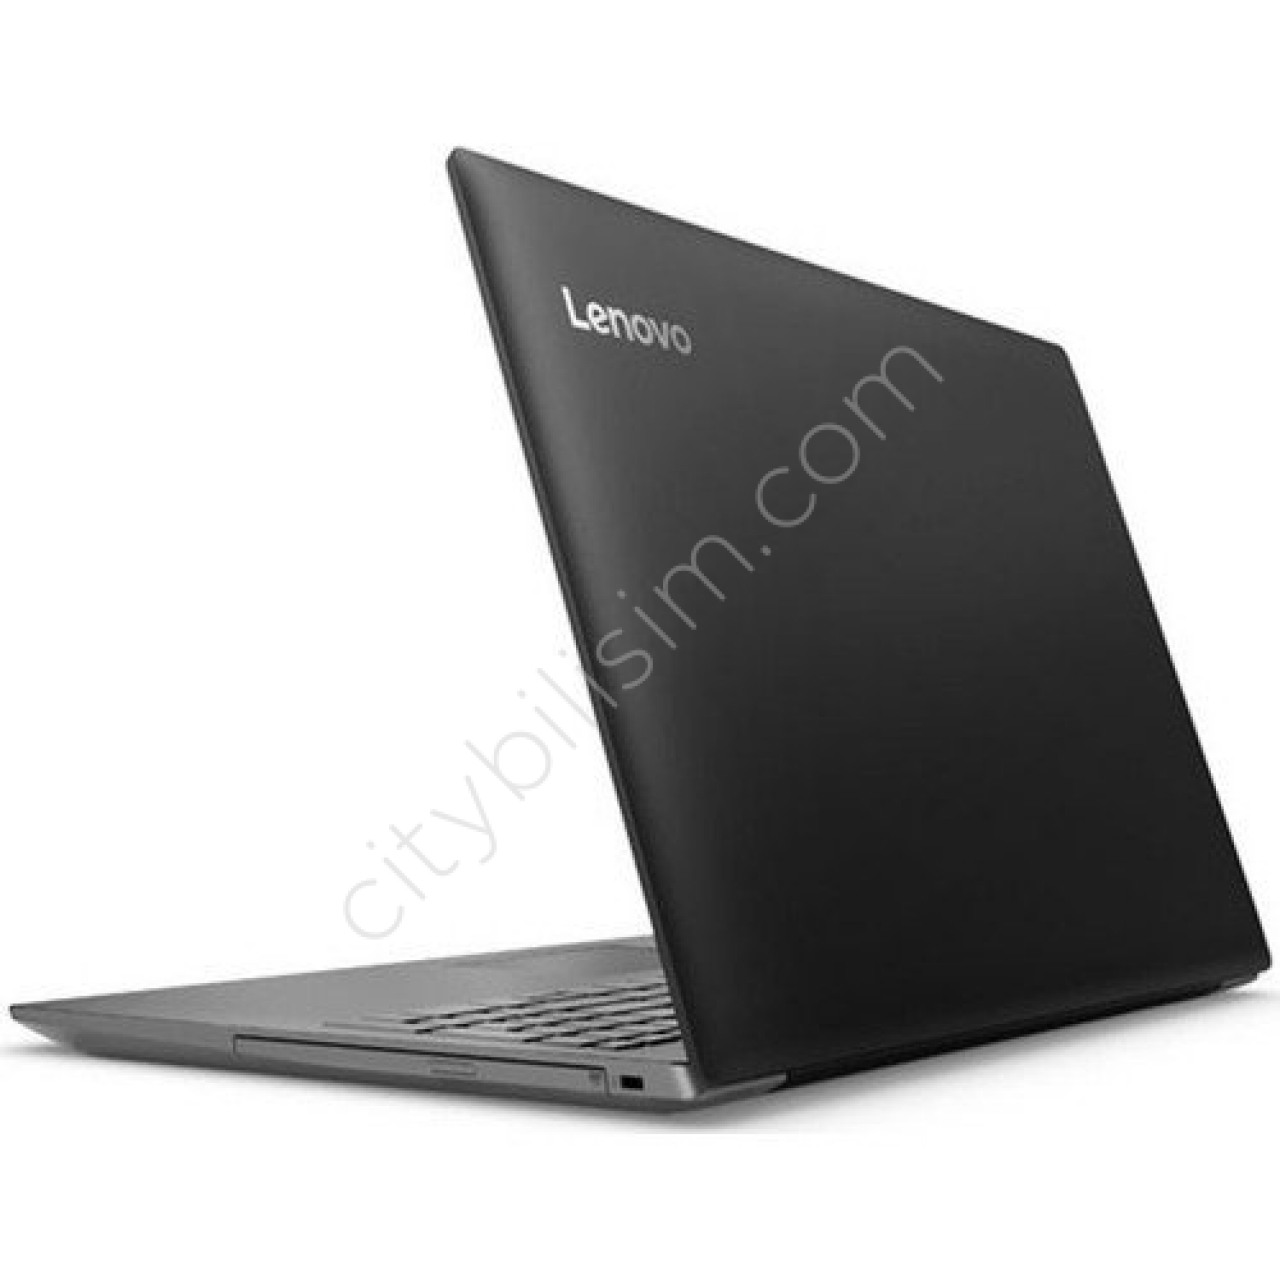 Lenovo IP 320 İ5-8250 8GB RAM 256GB SSD 2GB R530 15,6" Notebook